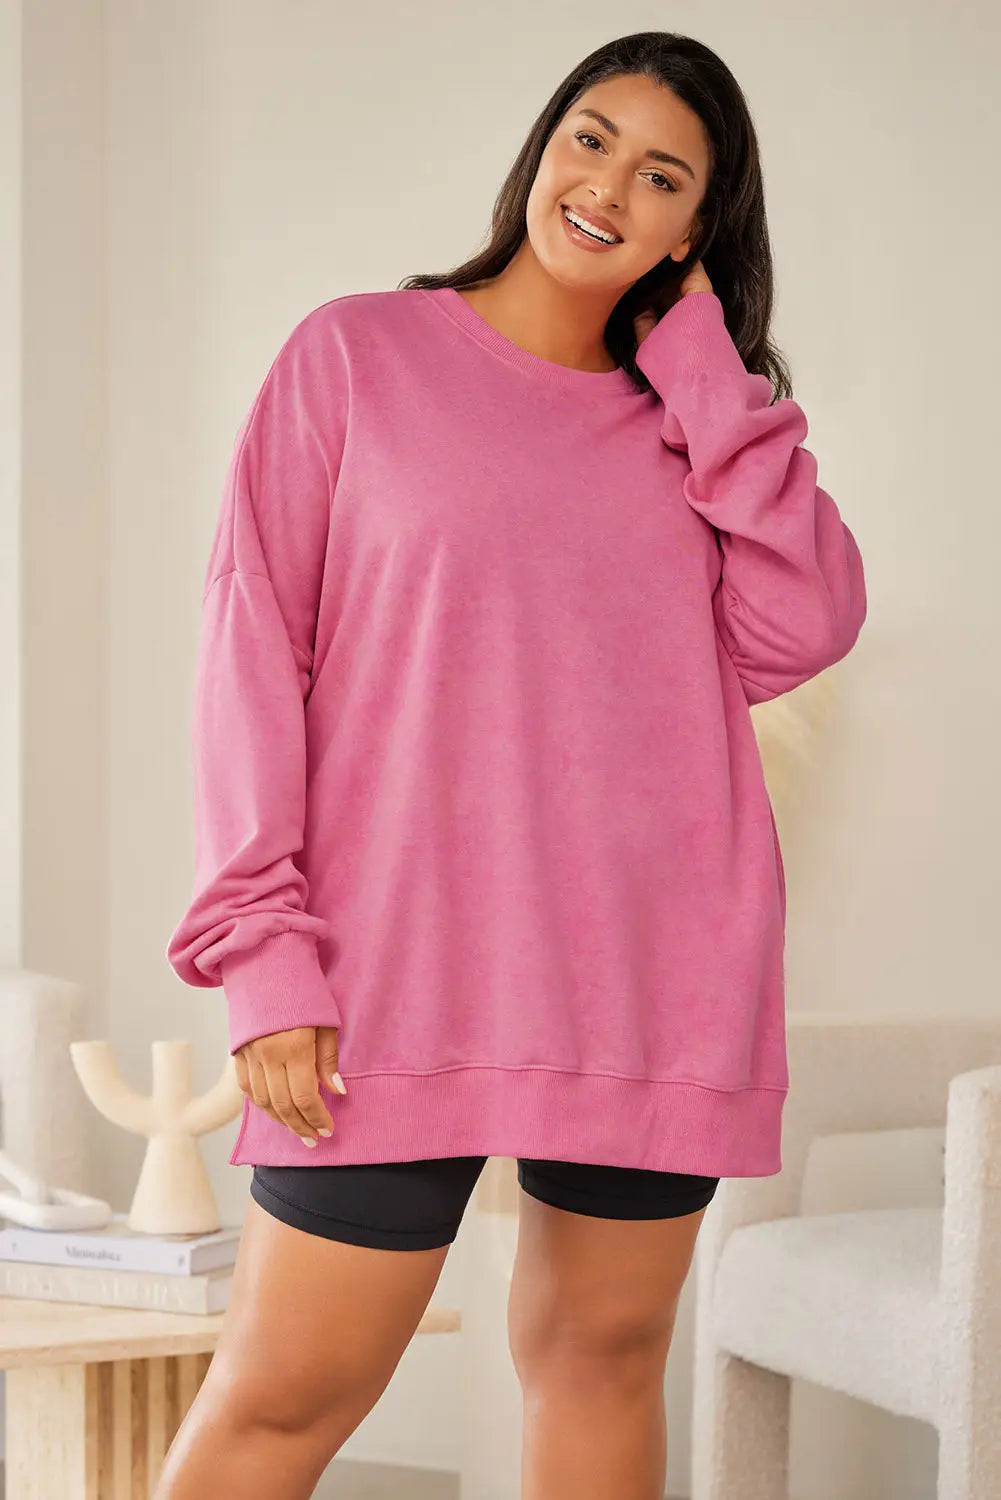 Black leopard patchwork bishop sleeve slit sweatshirt - pink / 1x / 75% polyester + 20% cotton + 5% elastane - tops